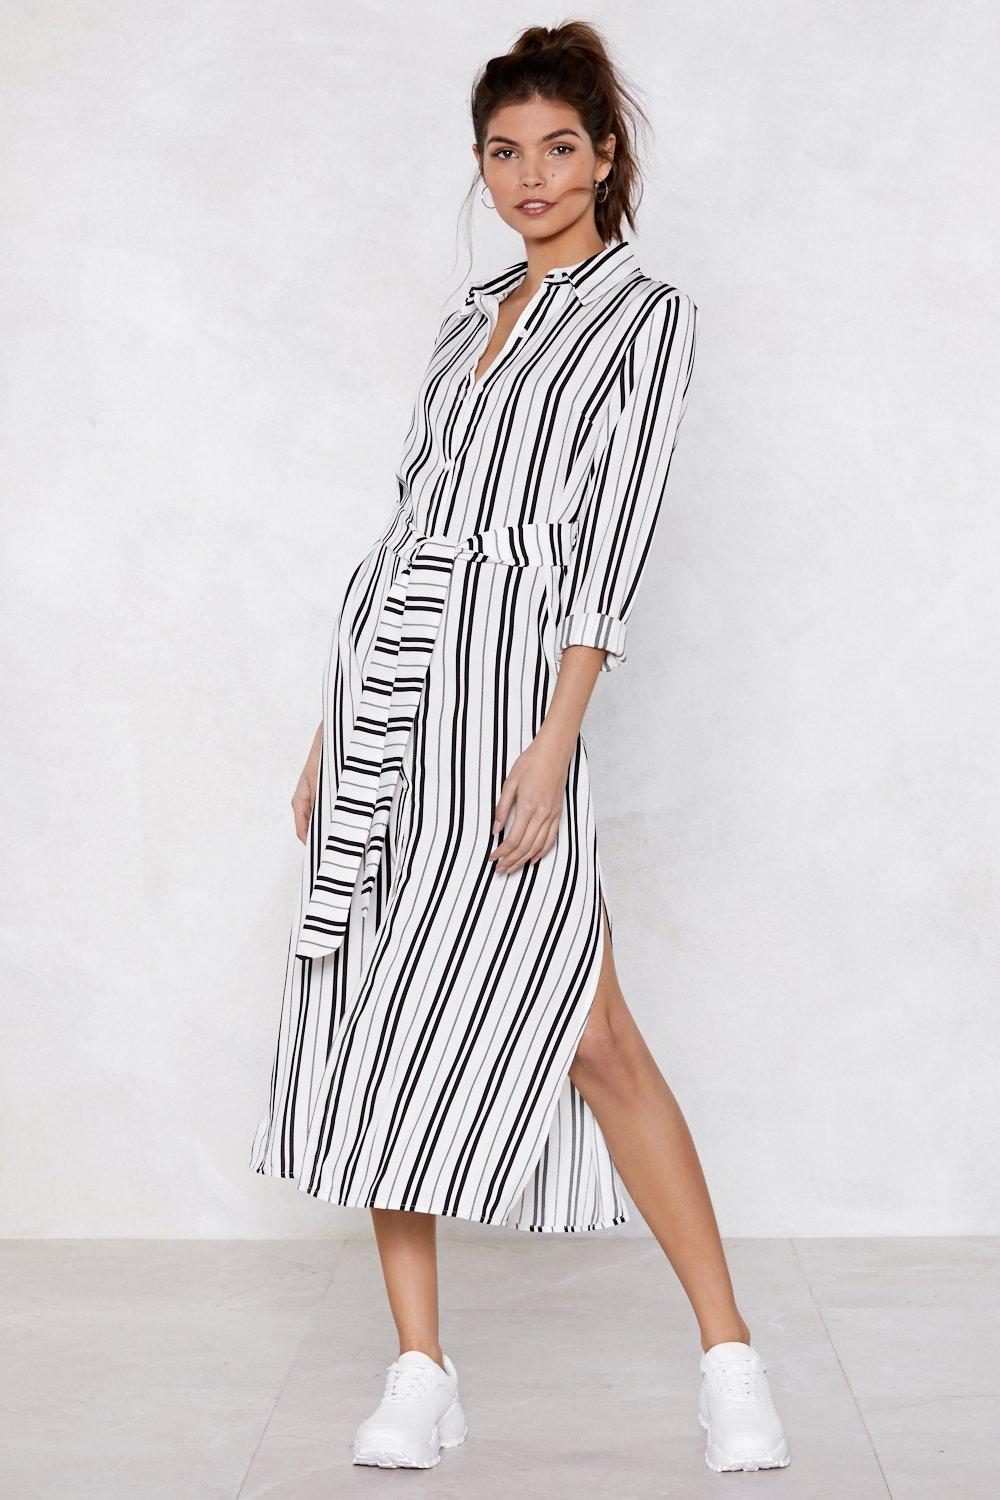 grey white striped dress